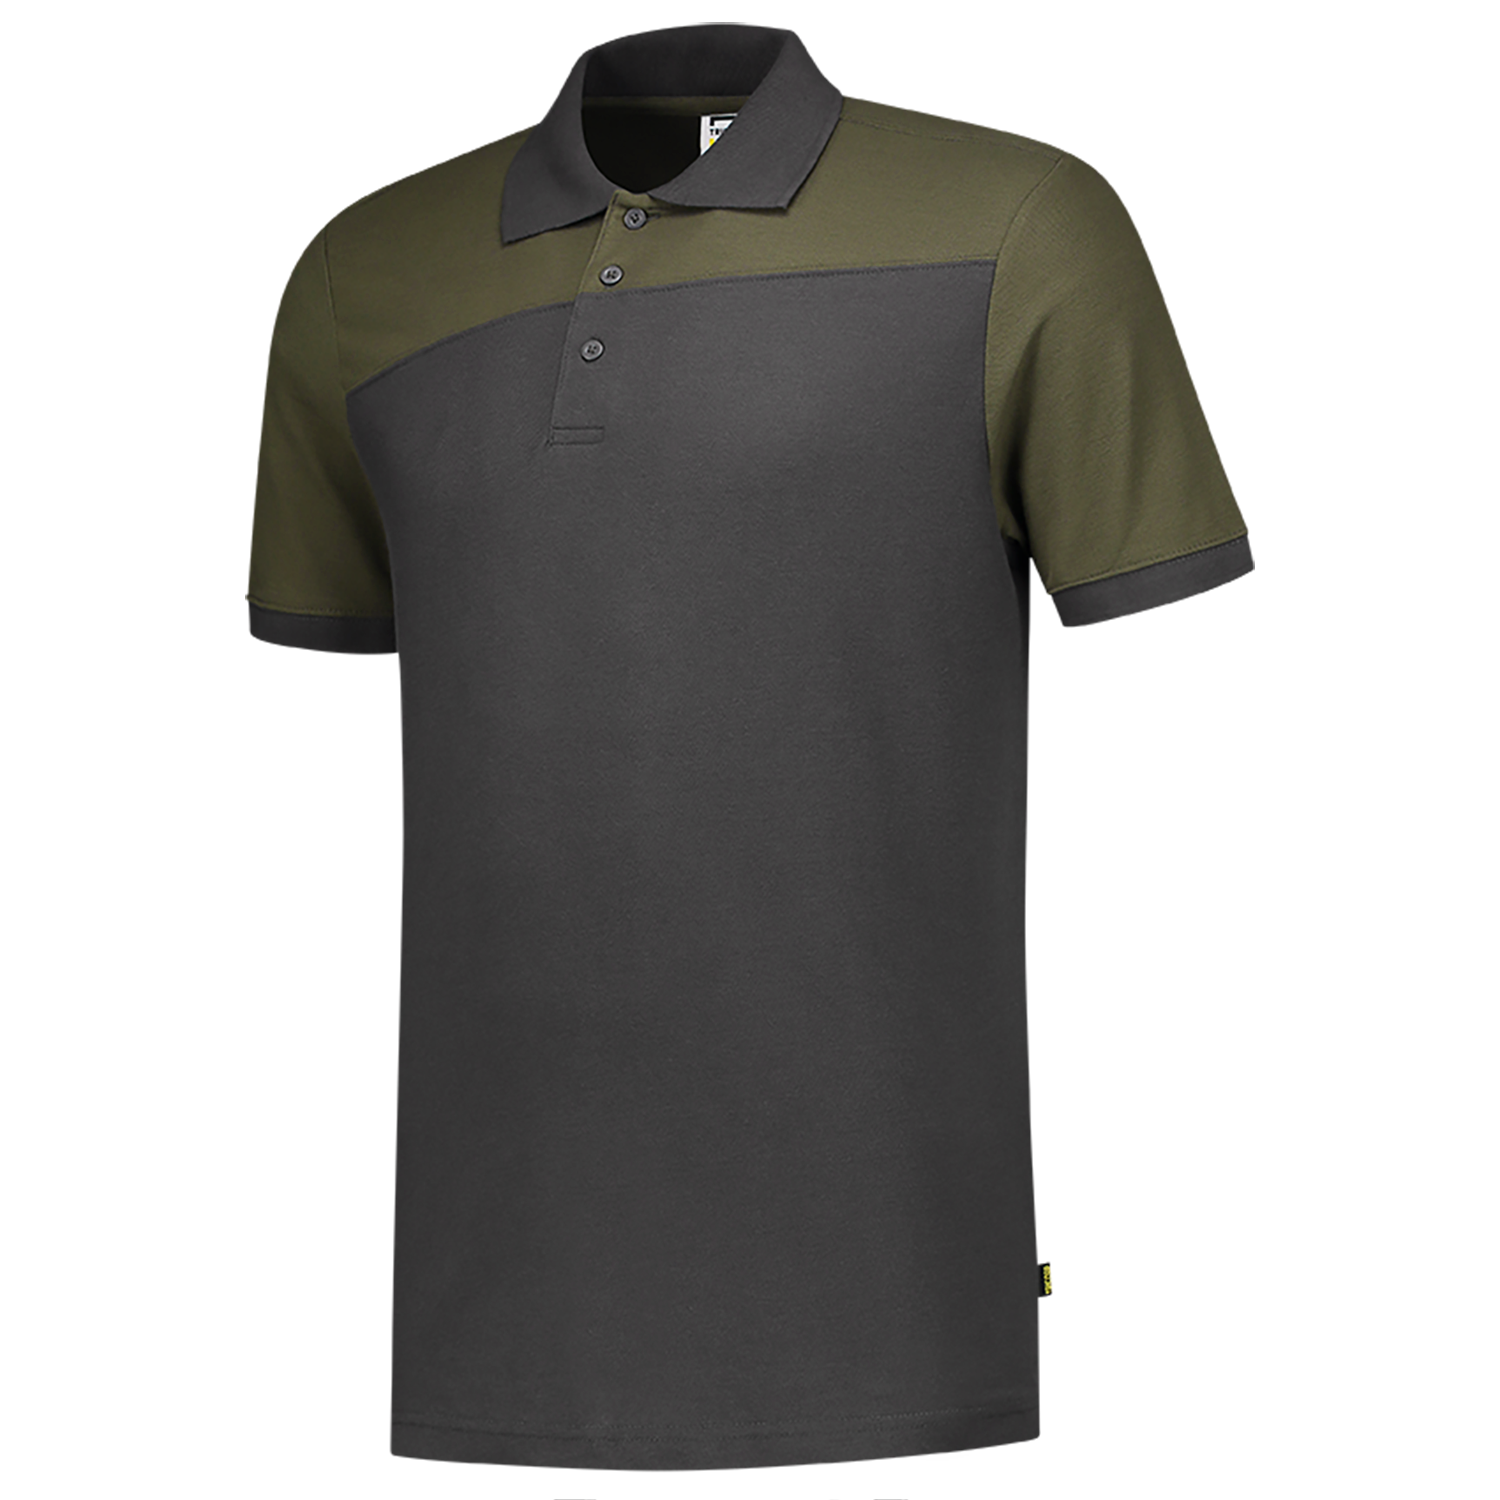 Polo shirt, two-tone cross seam